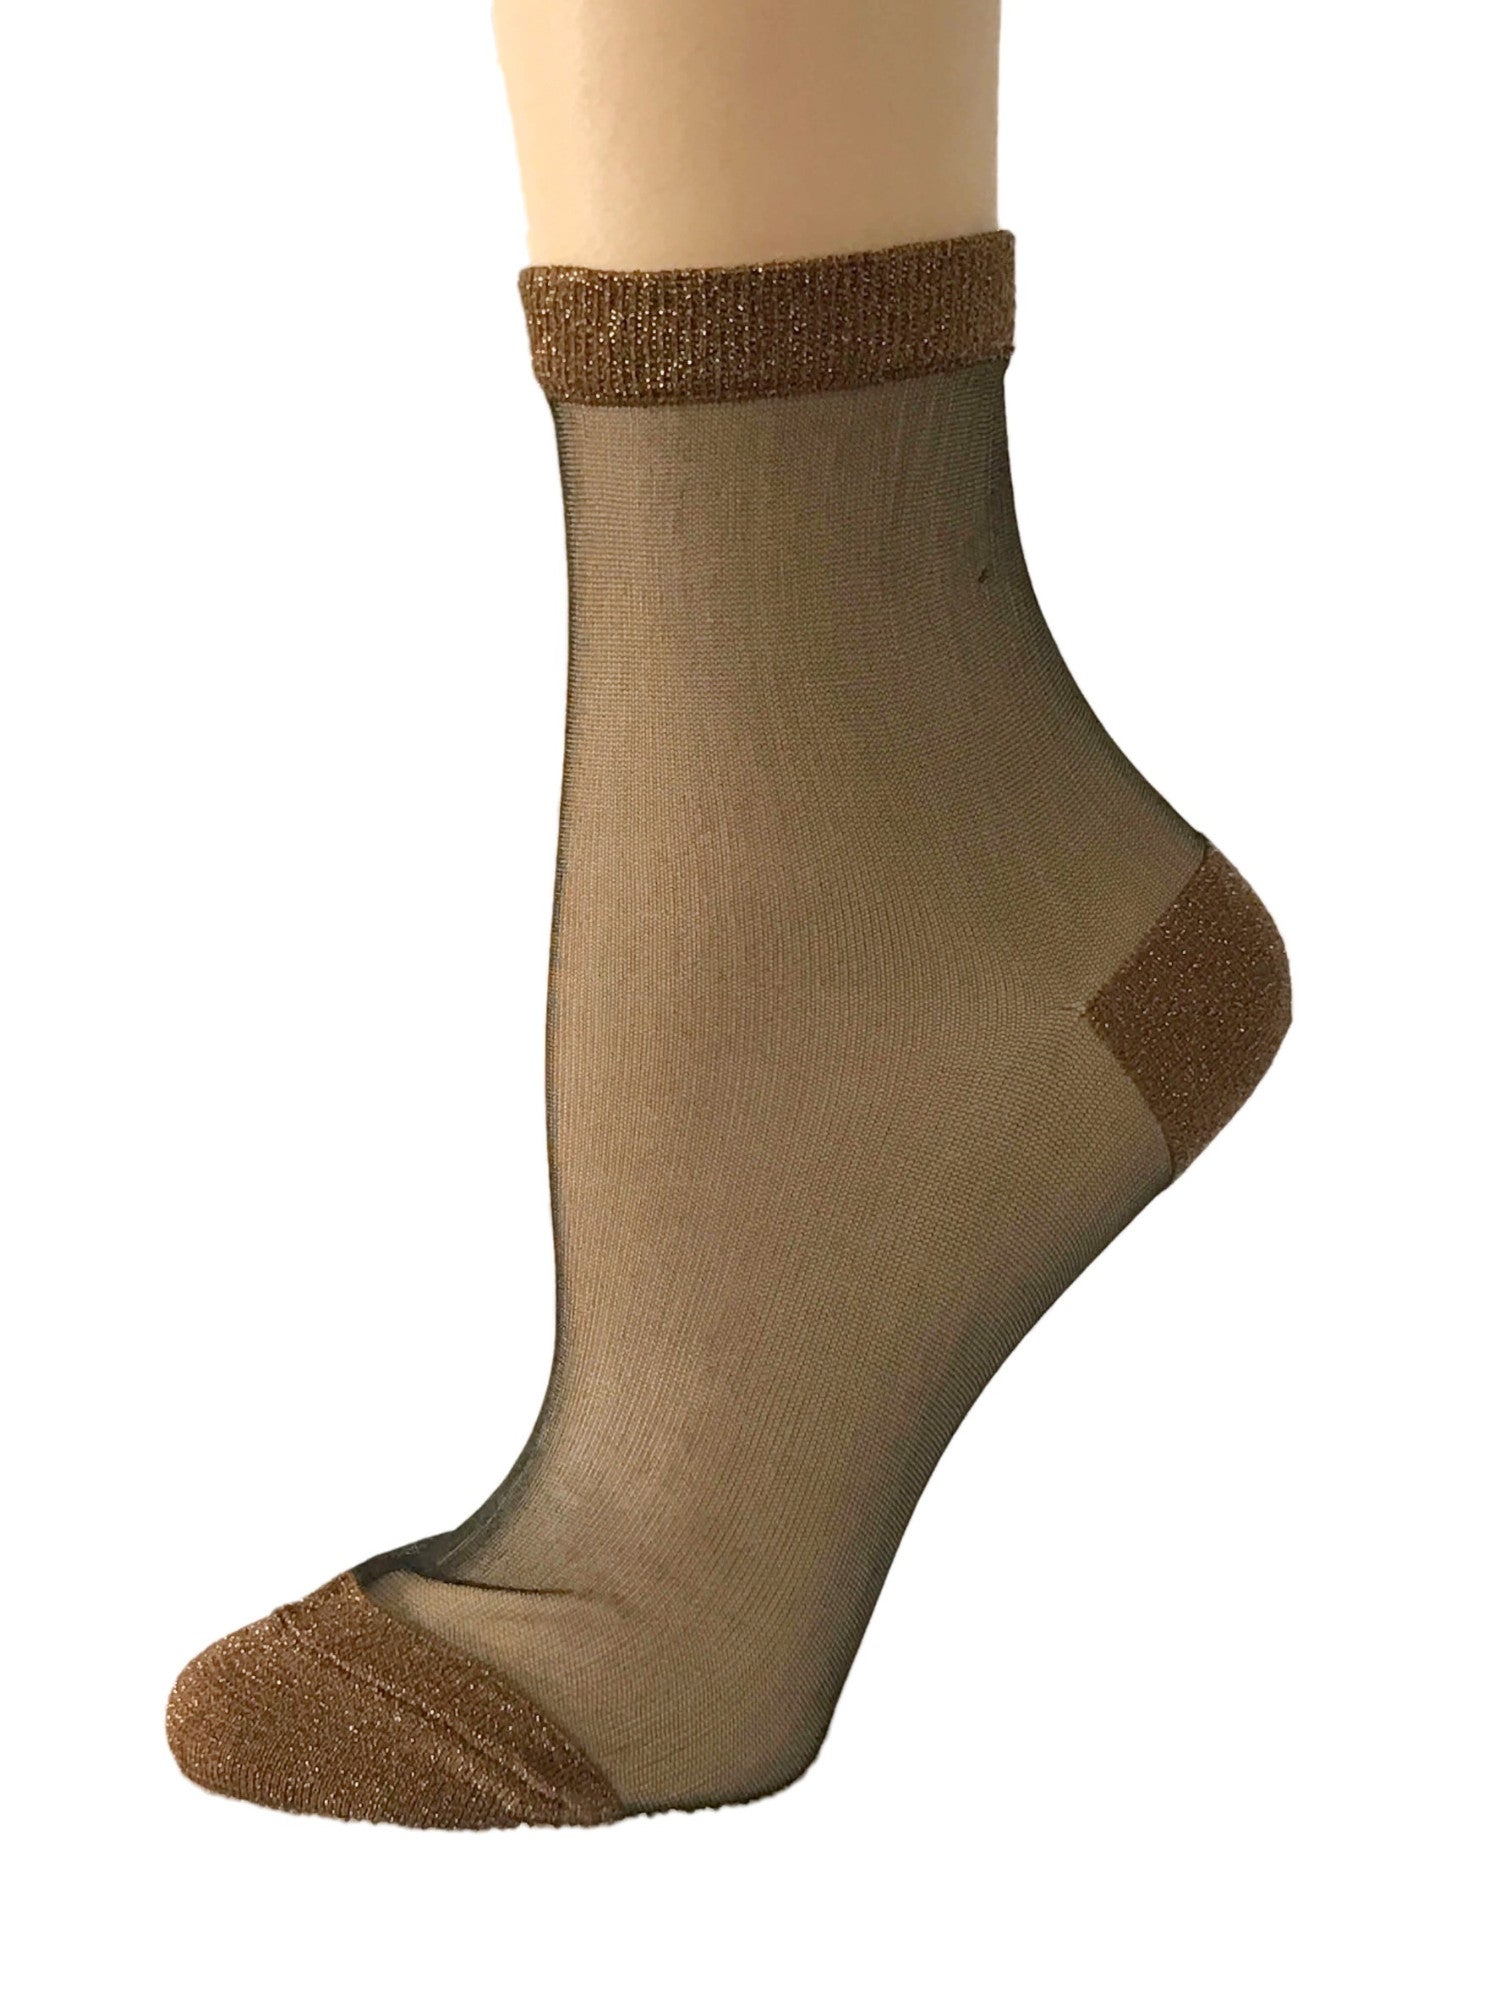 Charming Light Brown Glitter Socks - Global Trendz Fashion®